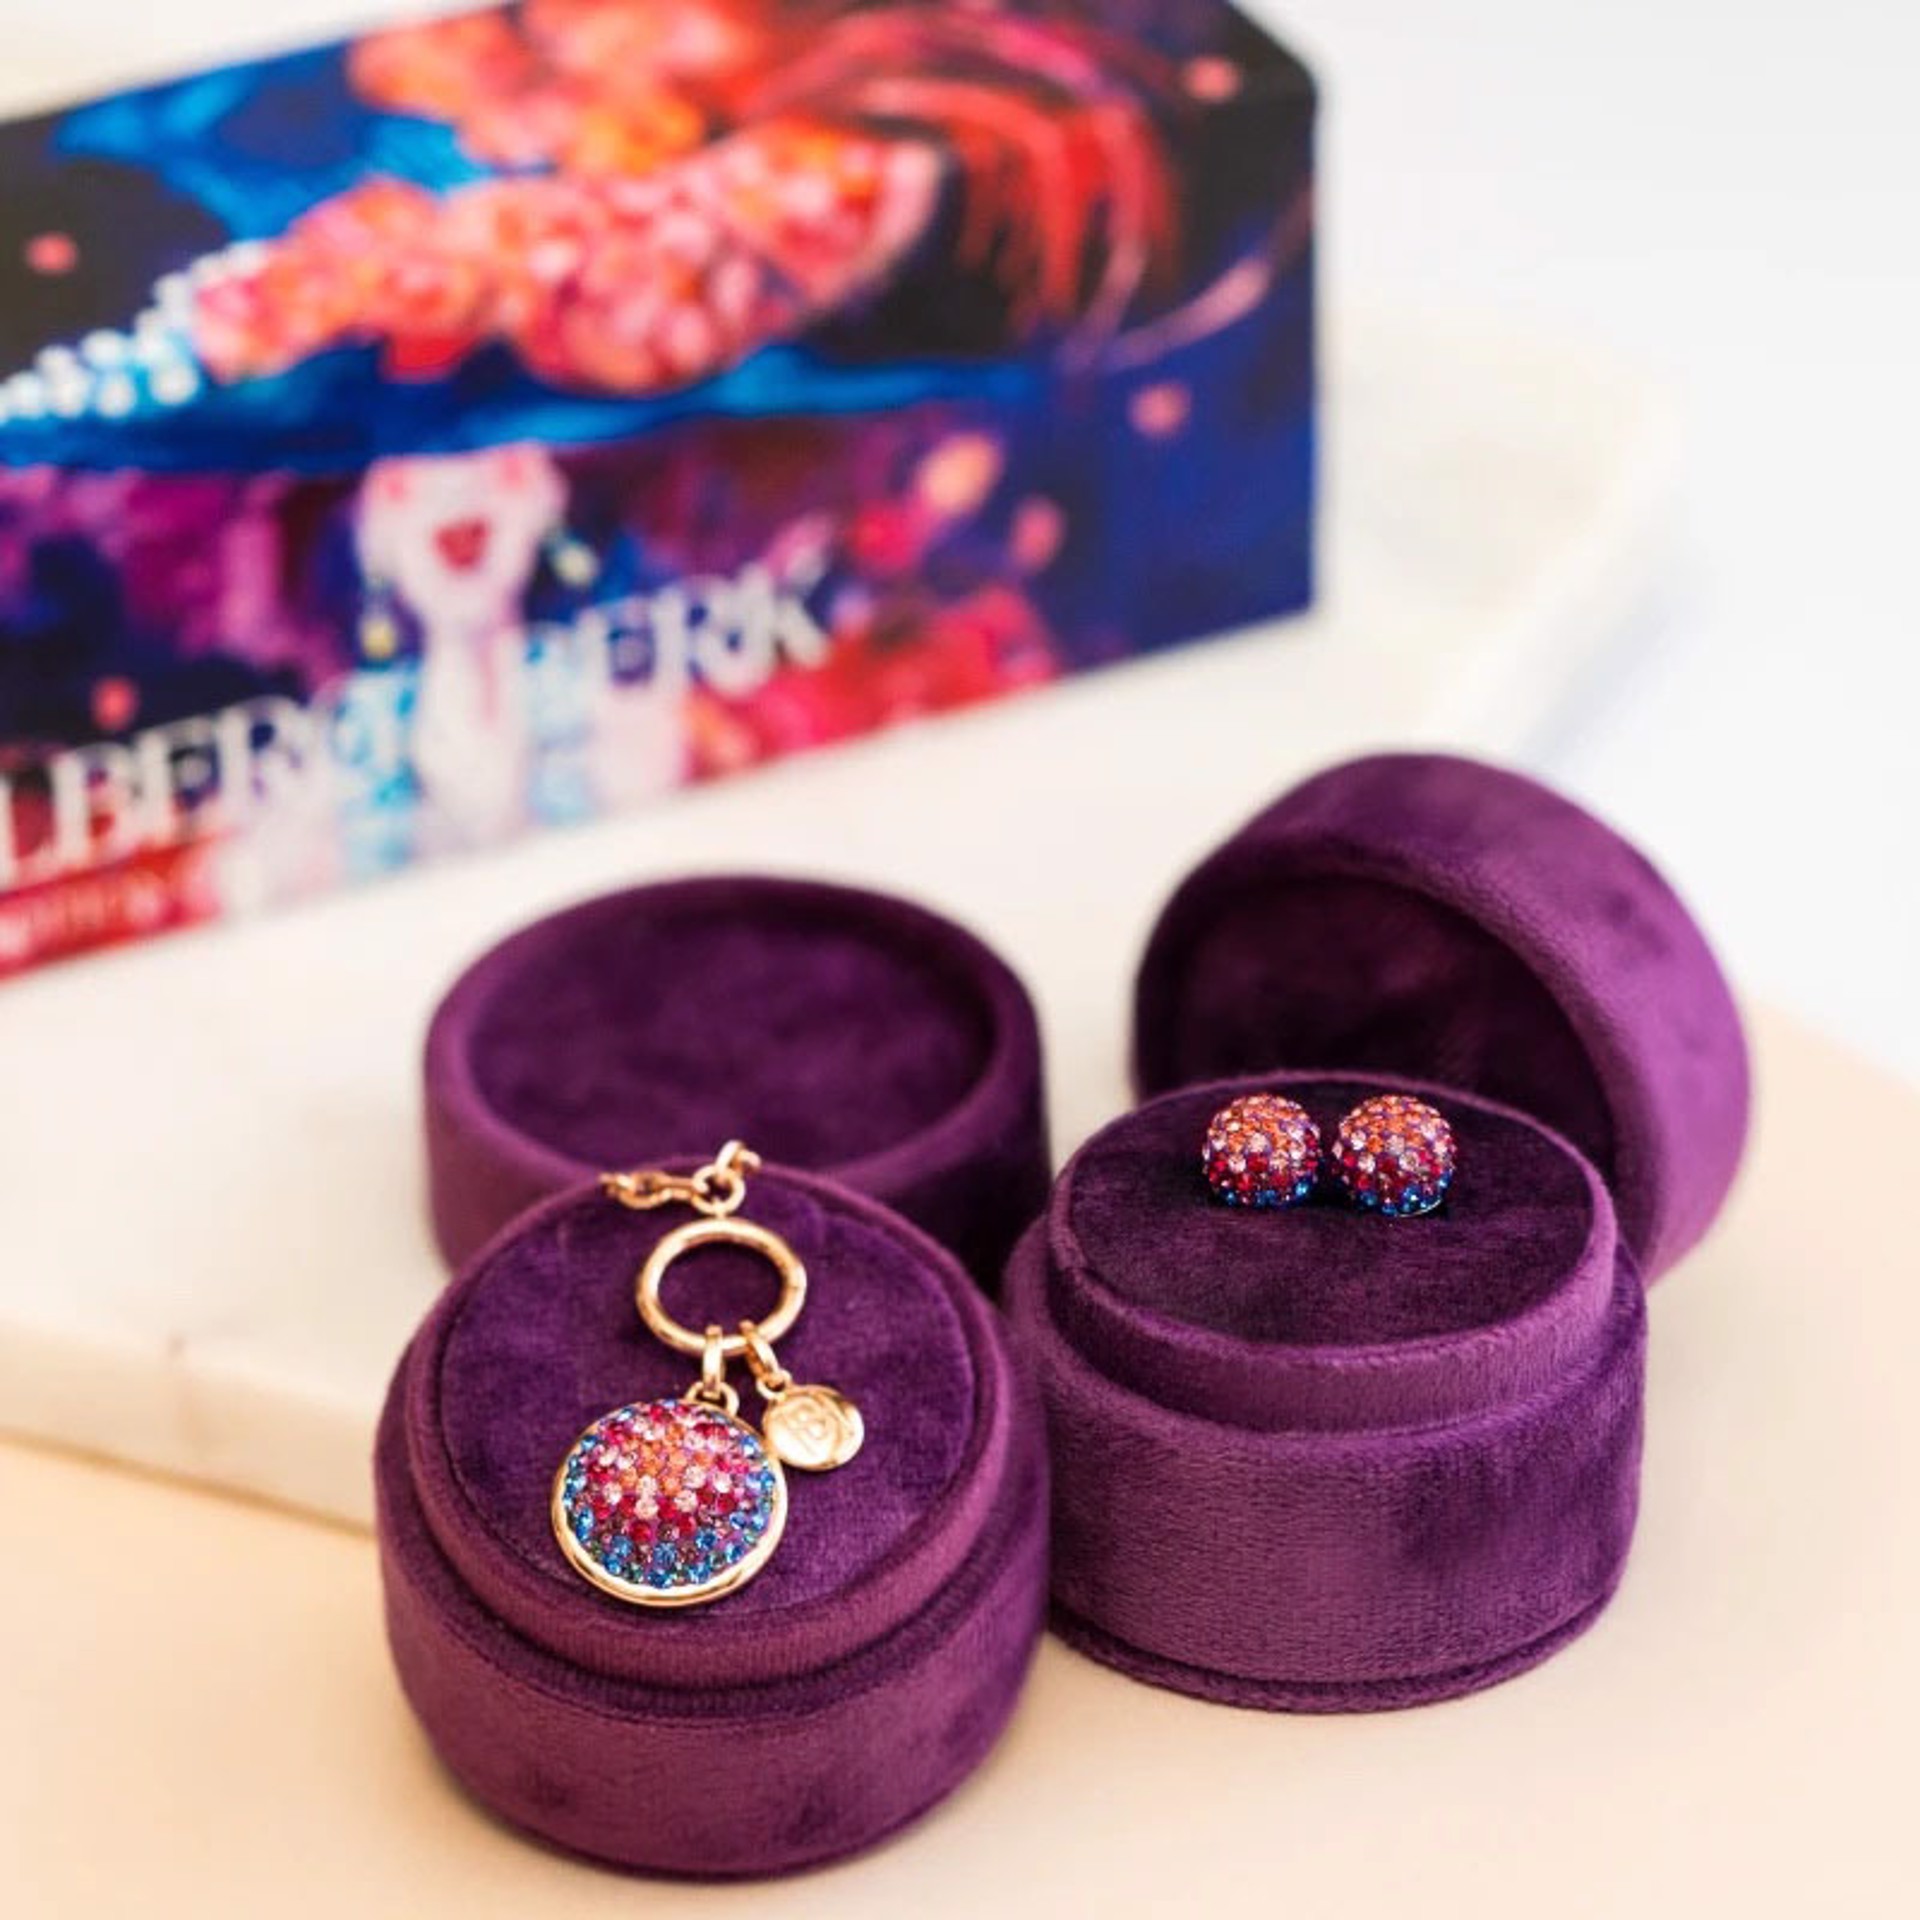 Debut Sparkle Ball Gift Set by Angela Morgan